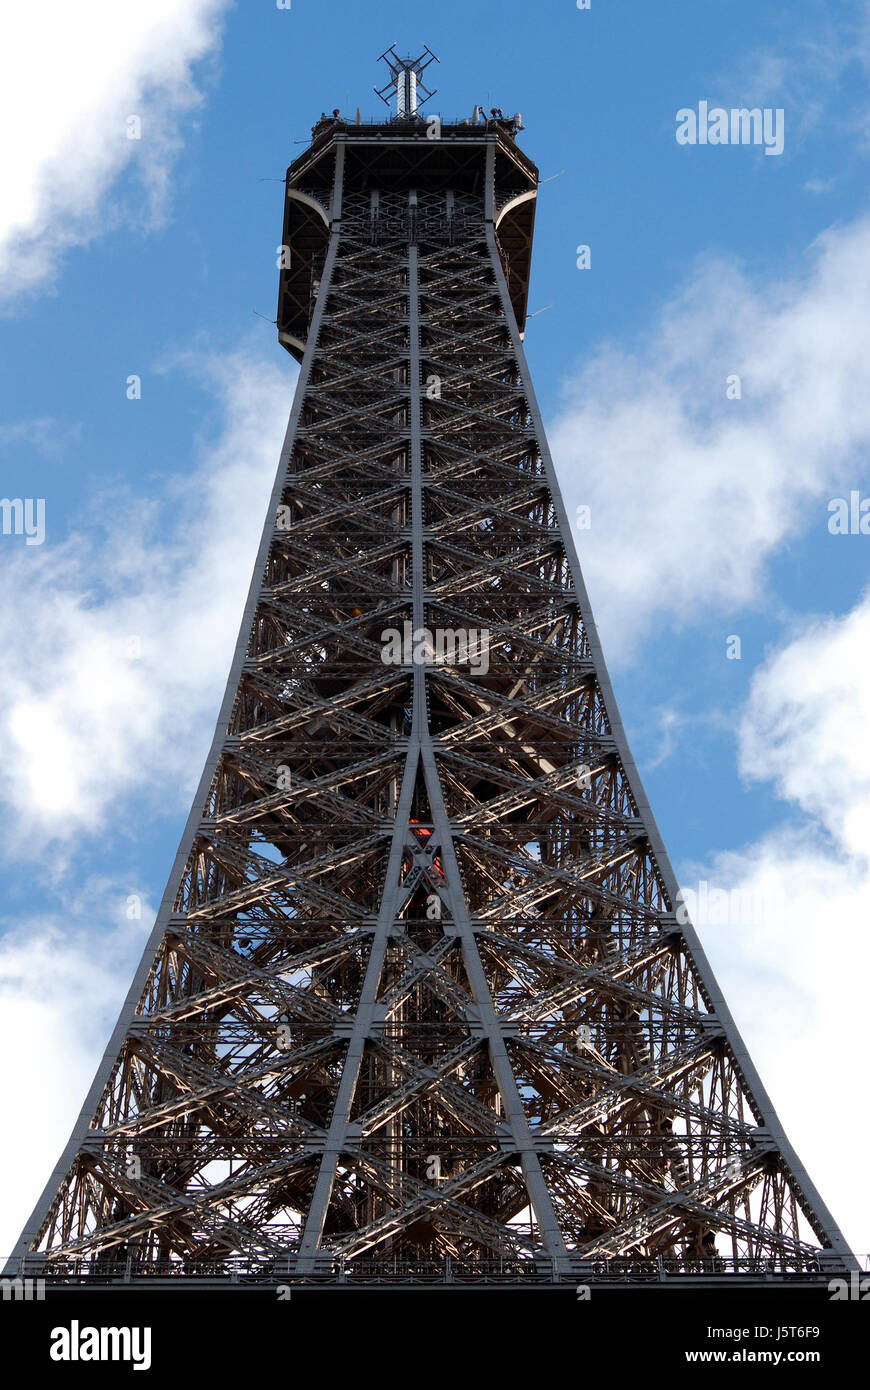 Turm von Paris Frankreich Hauptwelt Ausstellung Eiffel Turm Piktogramm Symbol Stockfoto